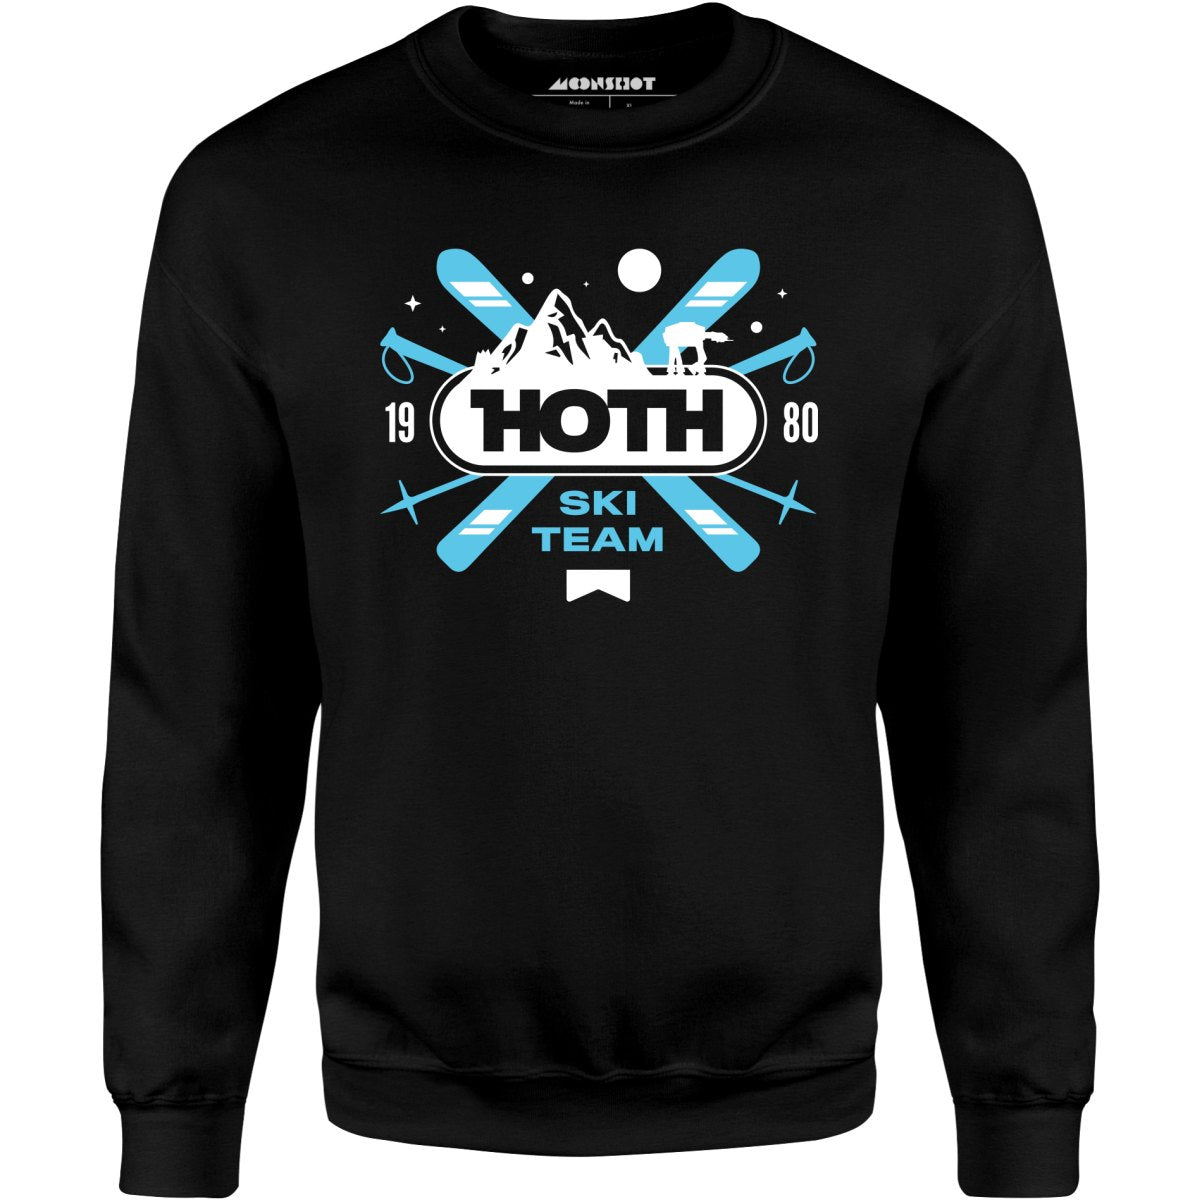 Hoth Ski Team - Unisex Sweatshirt